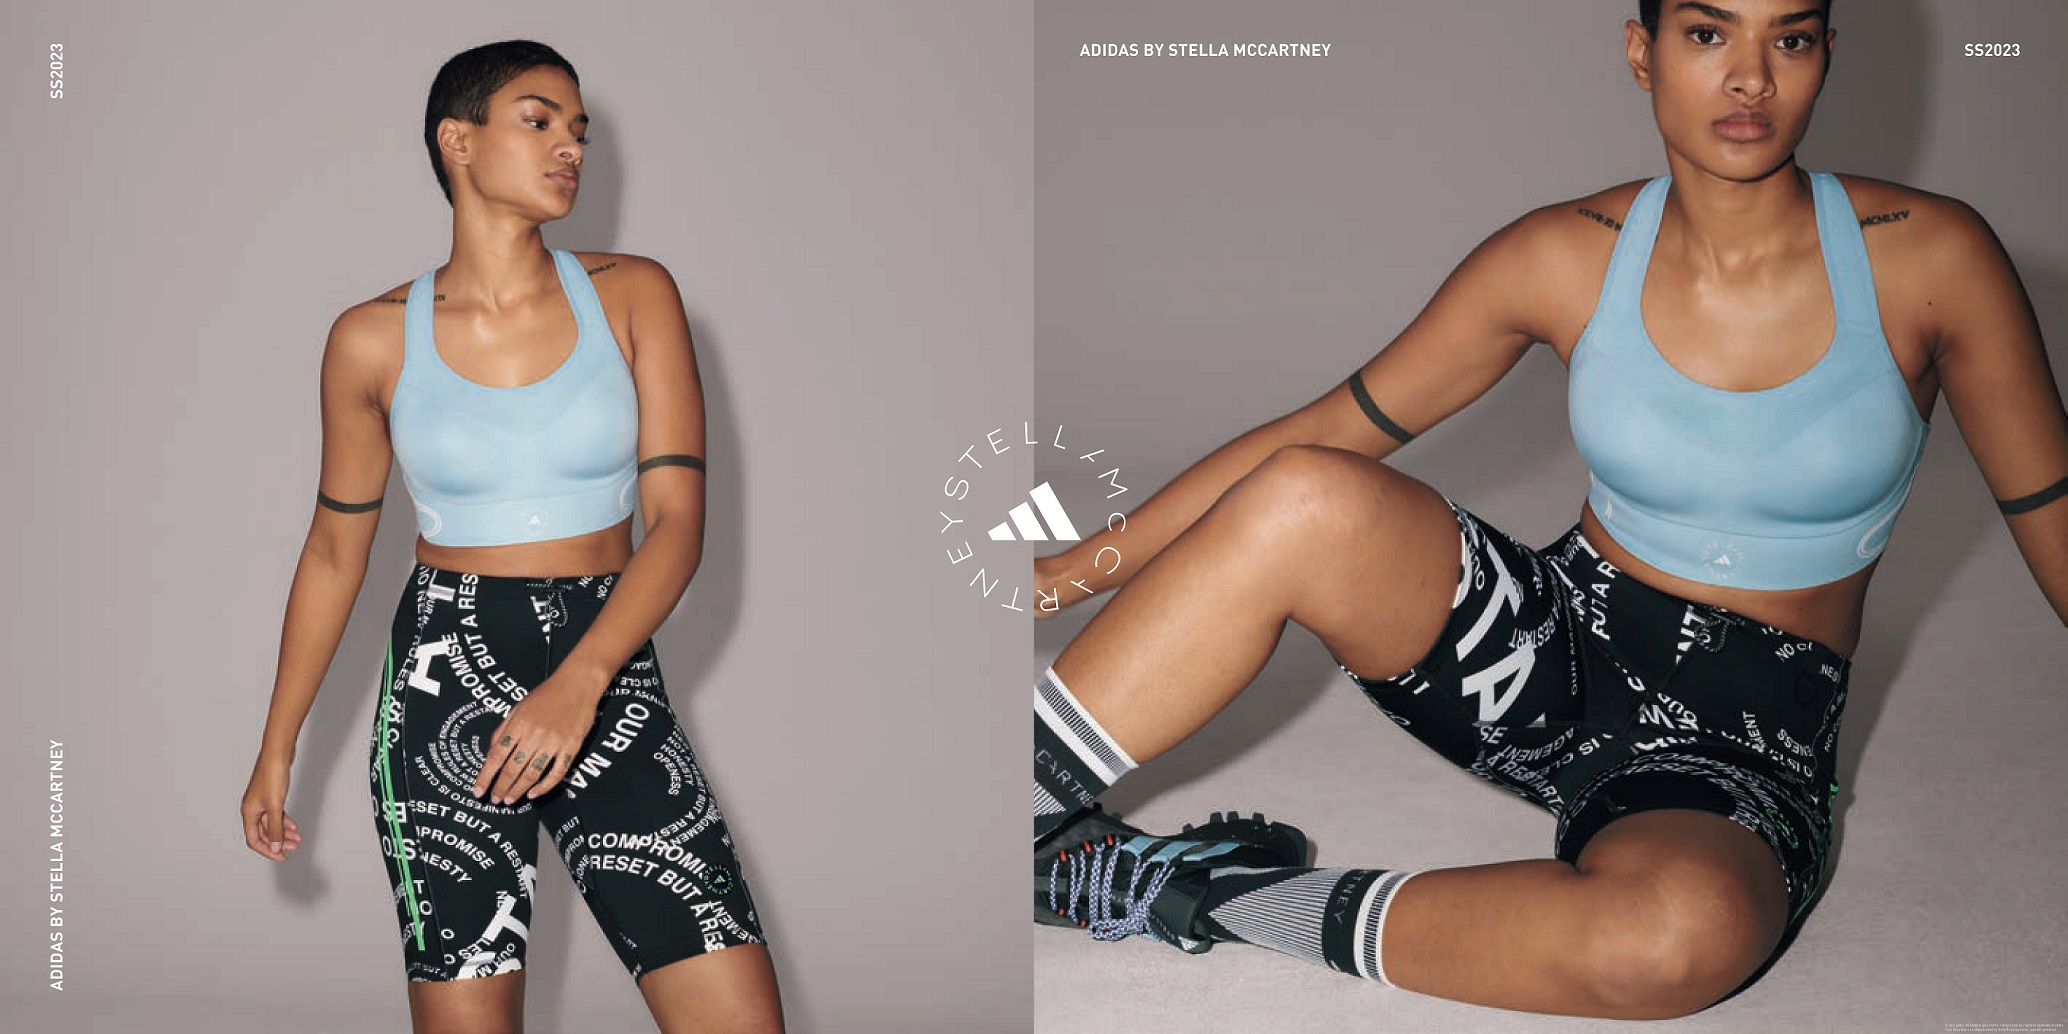 adidas by Stella McCartney春夏系列，推出揉合運動風格的訓練服飾，全系列使用回收塑料再造的PRIMEBLUE環保紗線材質，運動健身的同時更為環境盡一份心力。官方提供